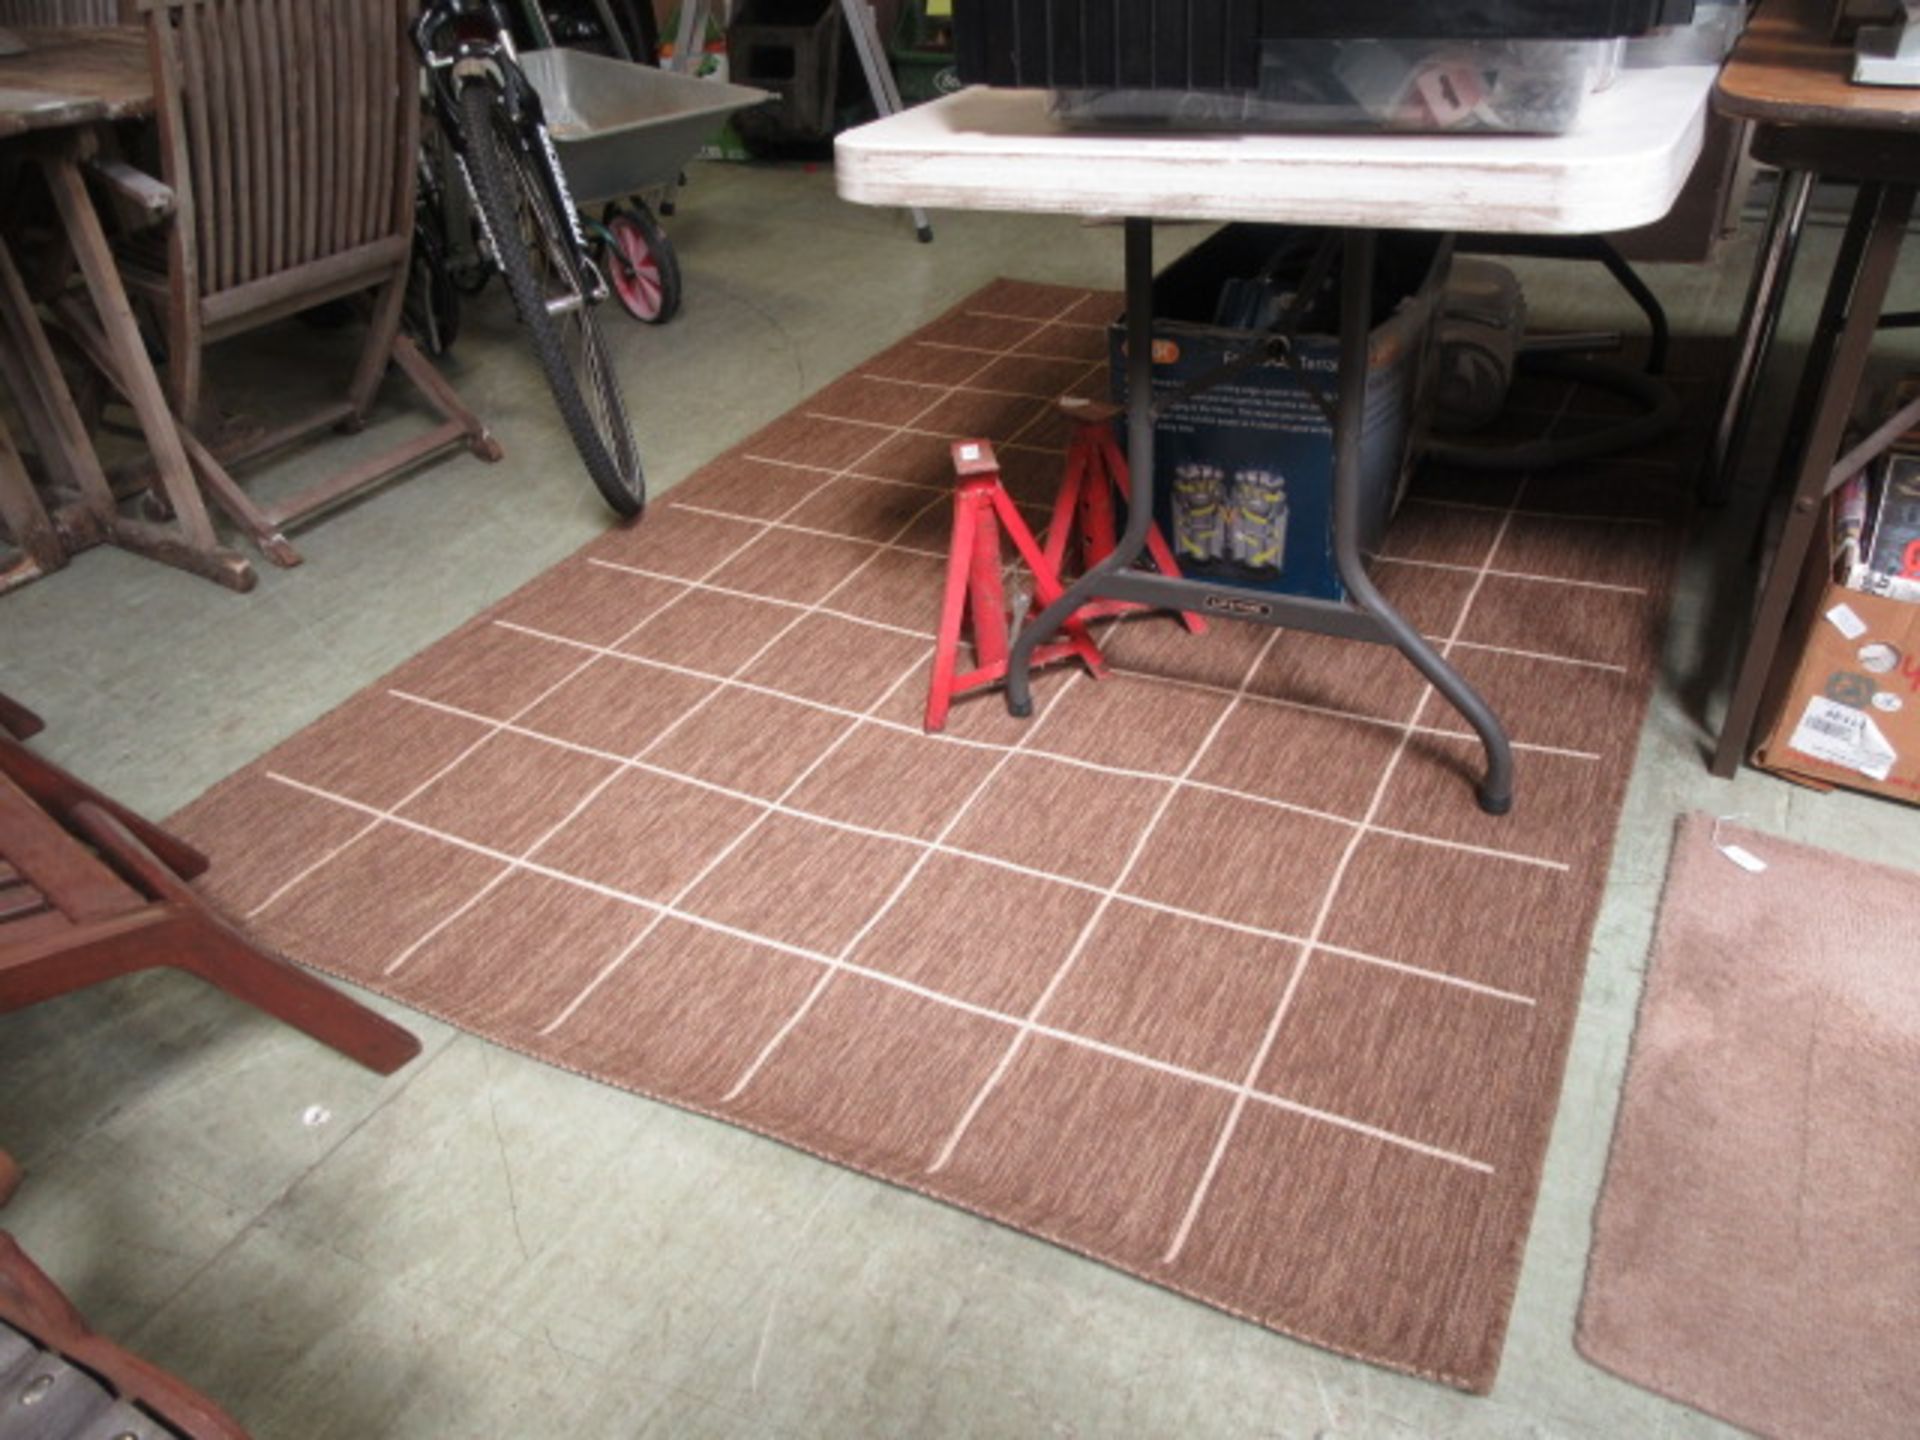 A modern rug